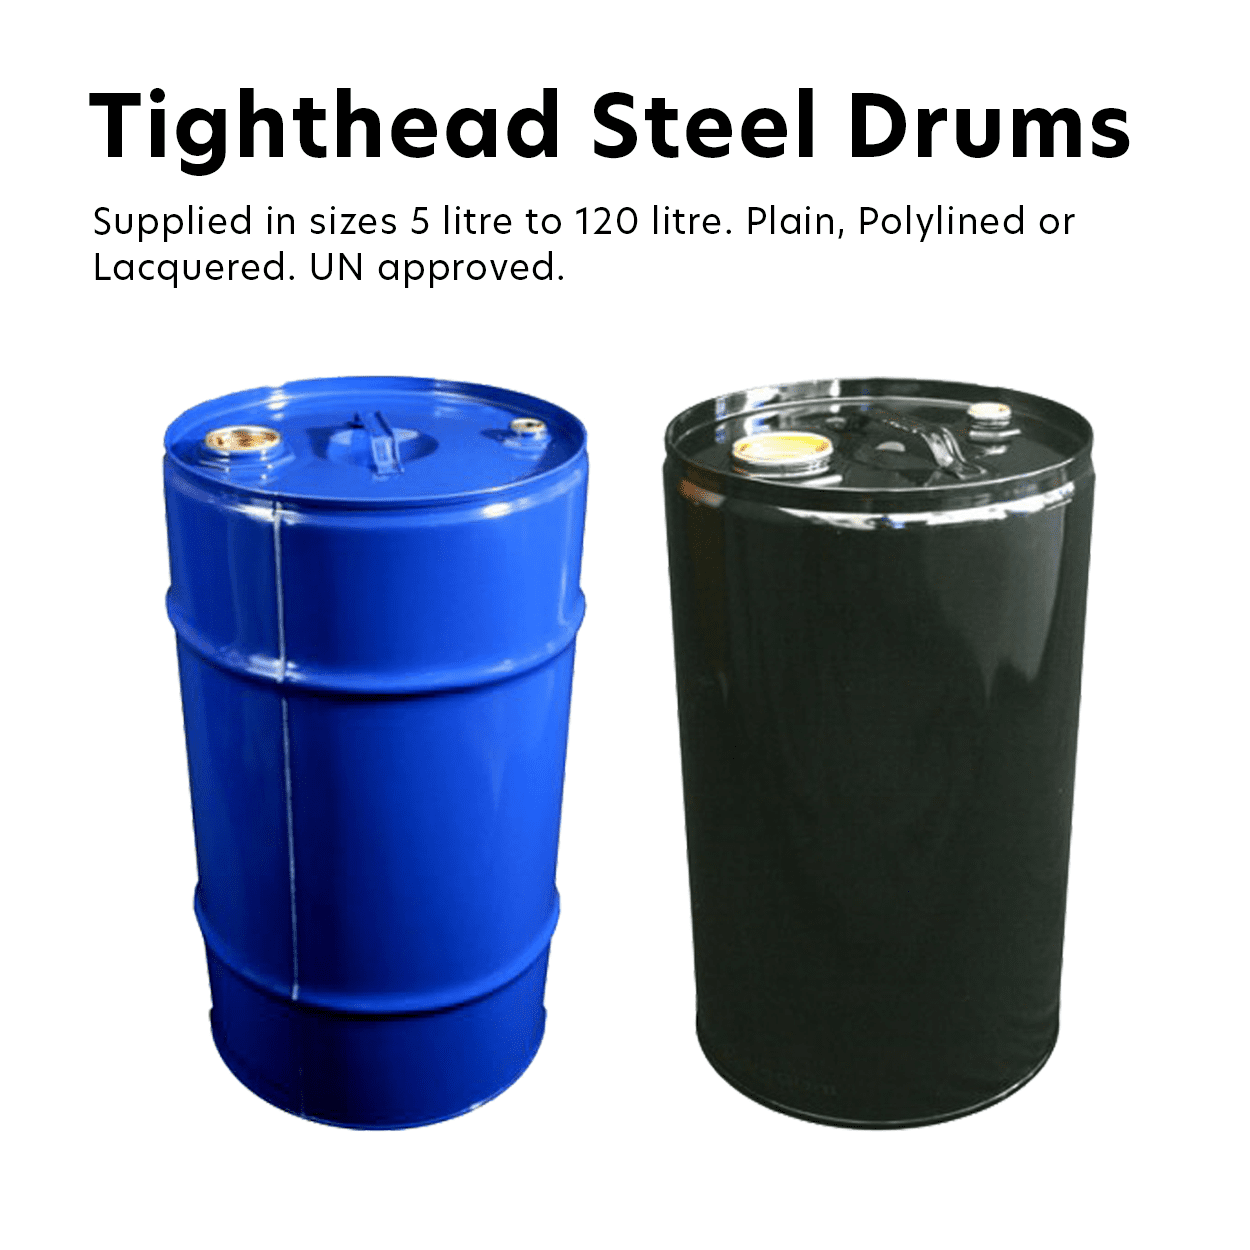 Tighthead Steel Drums